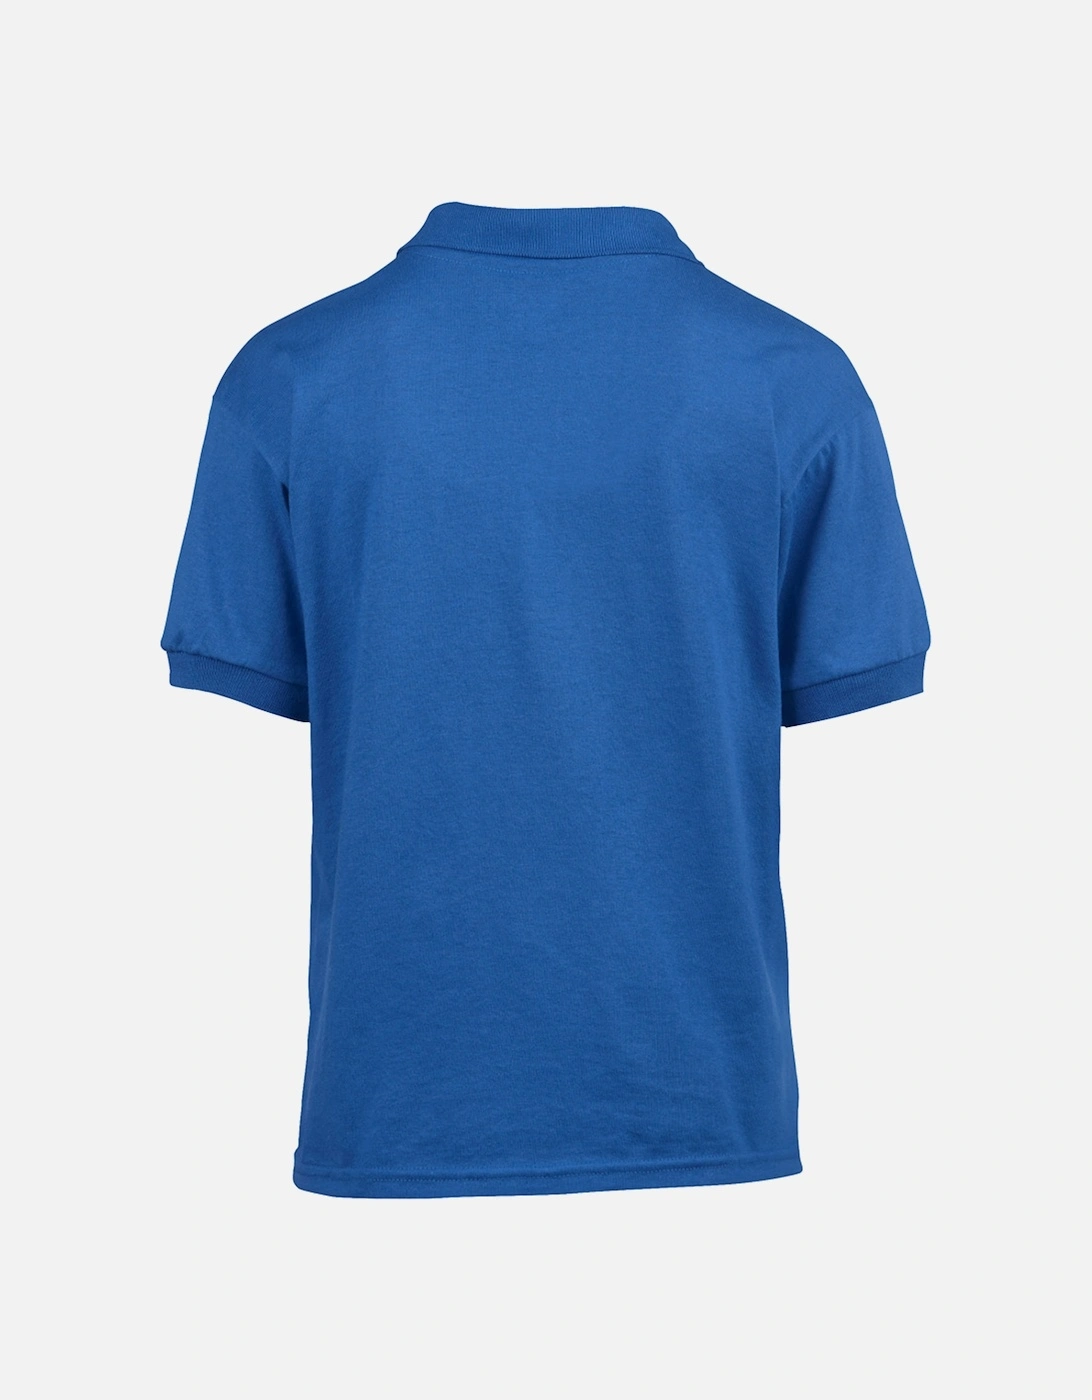 DryBlend Childrens Unisex Jersey Polo Shirt